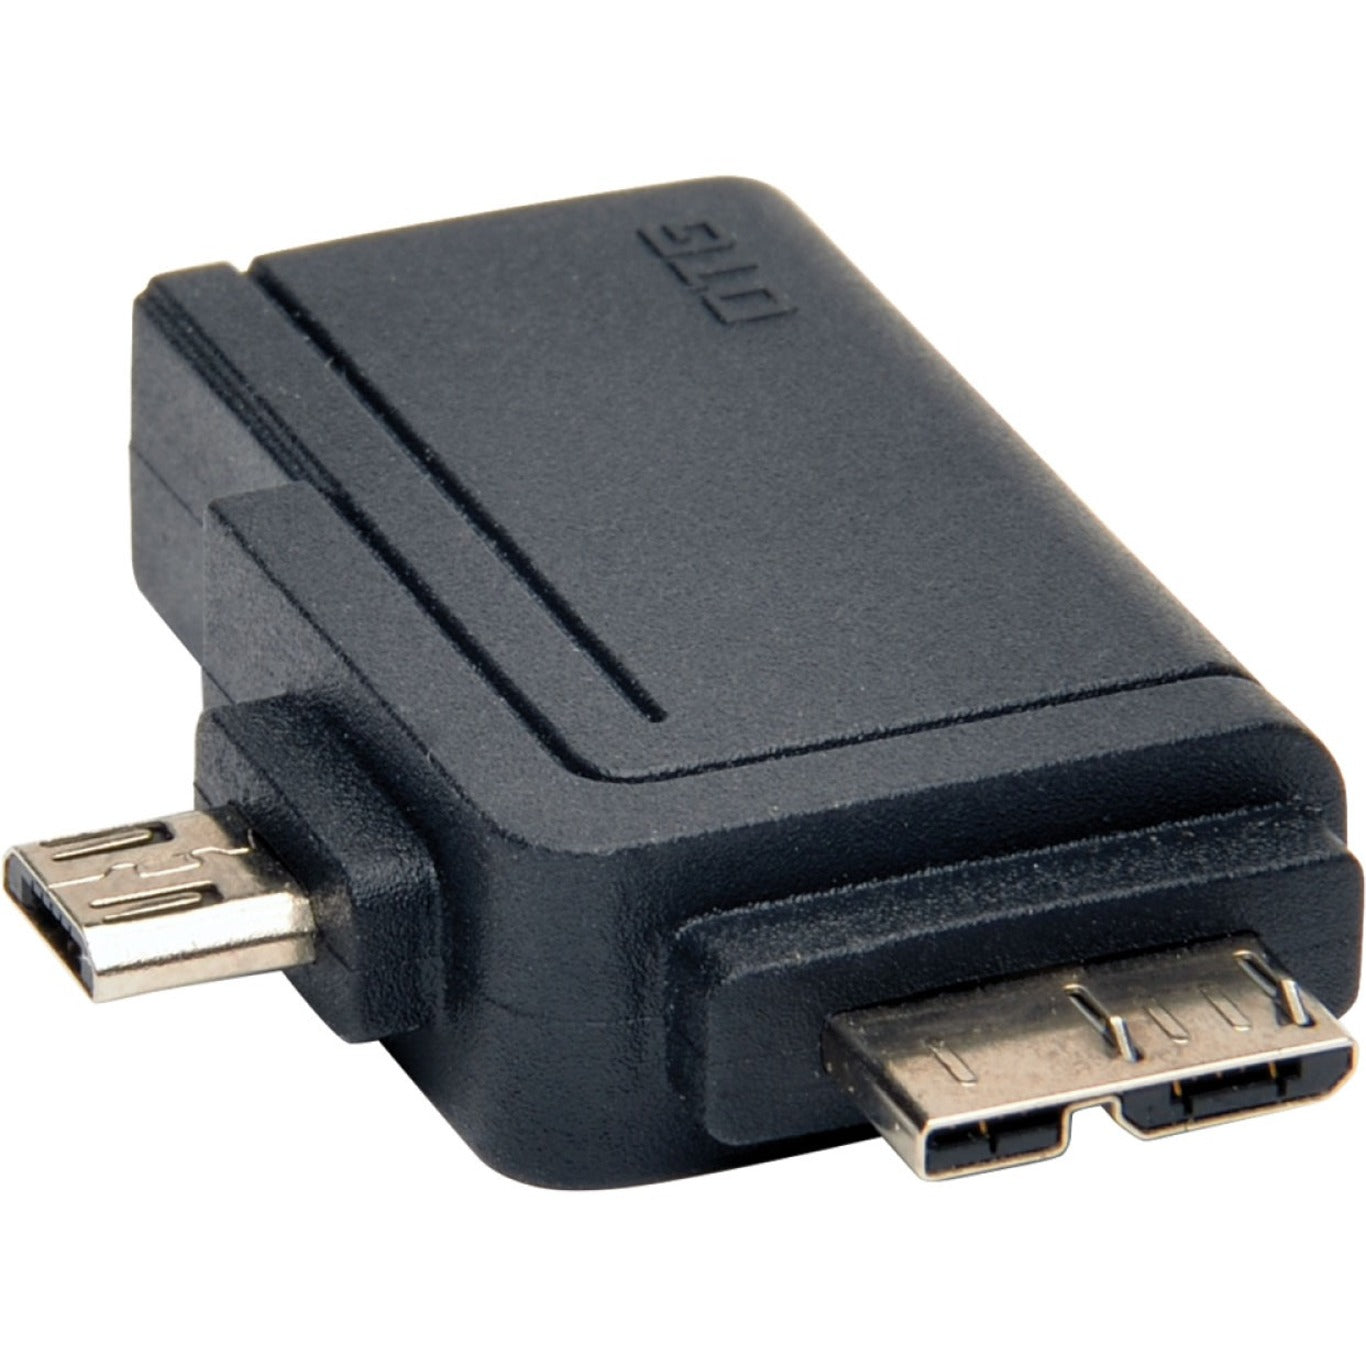 Tripp Lite U053-000-OTG 2-in-1 OTG Adapter USB 3.0 + 2.0, Data Transfer Adapter